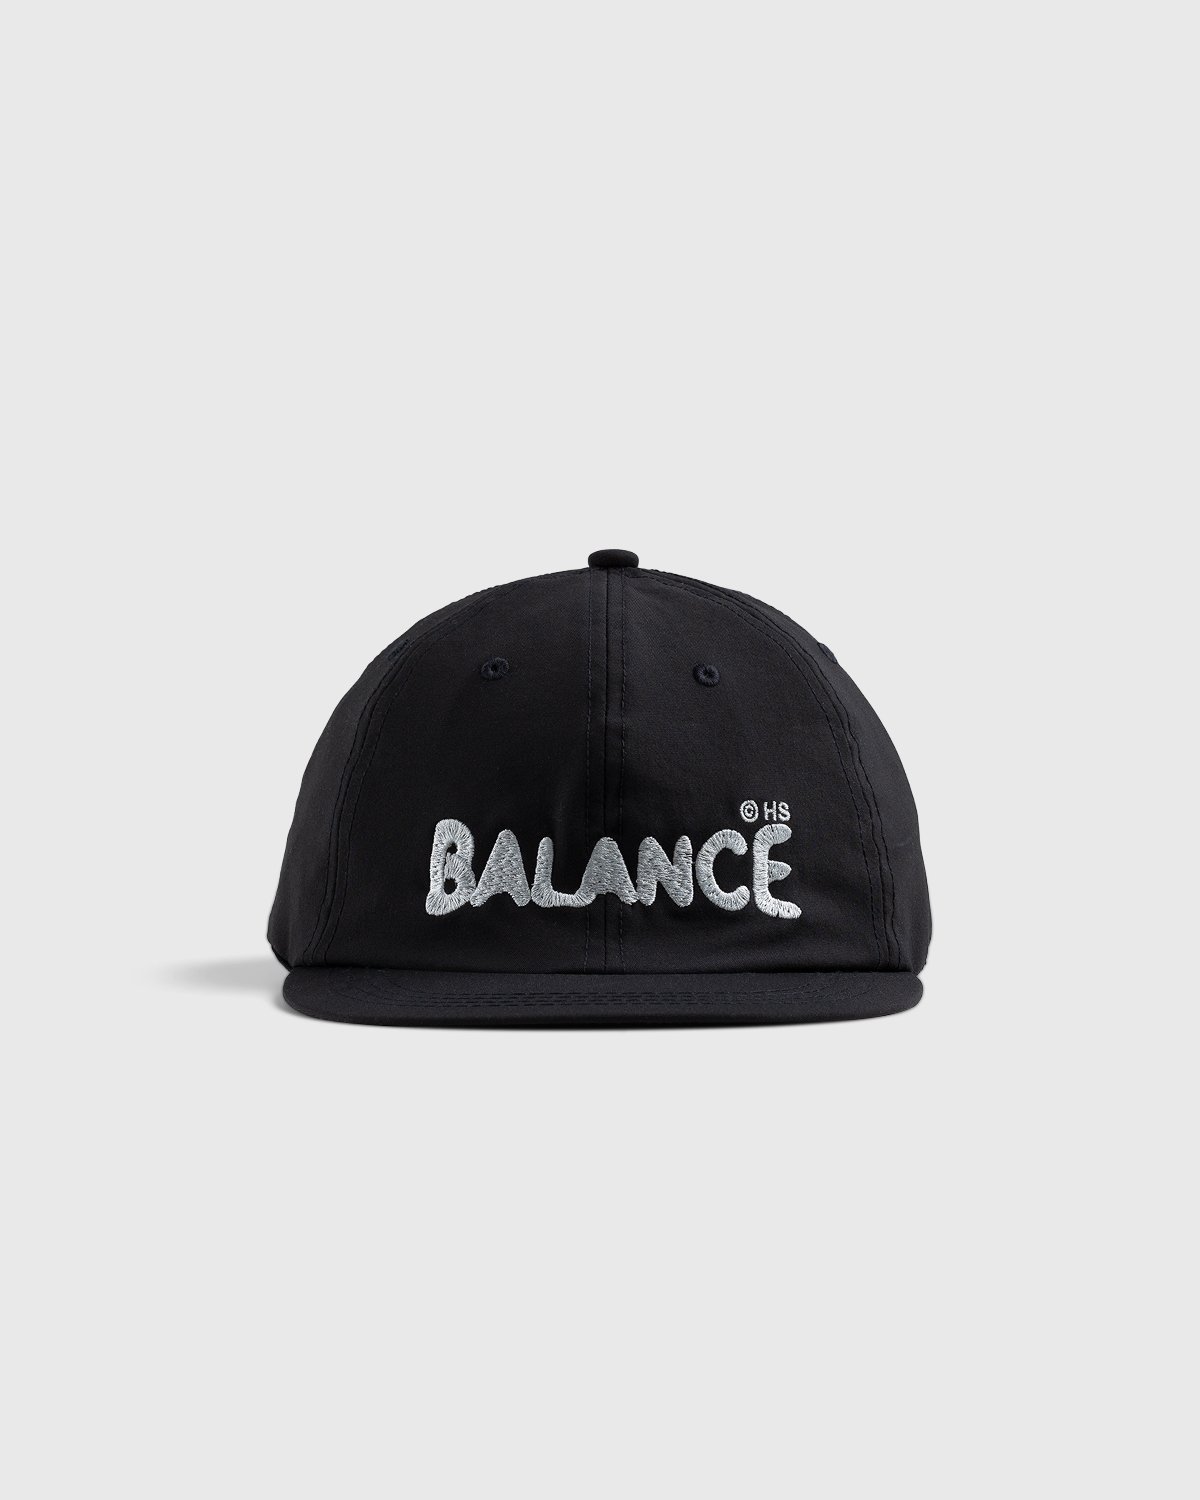 Satisfy x Highsnobiety - HS Sports Balance Running Cap Black - Accessories - Black - Image 2